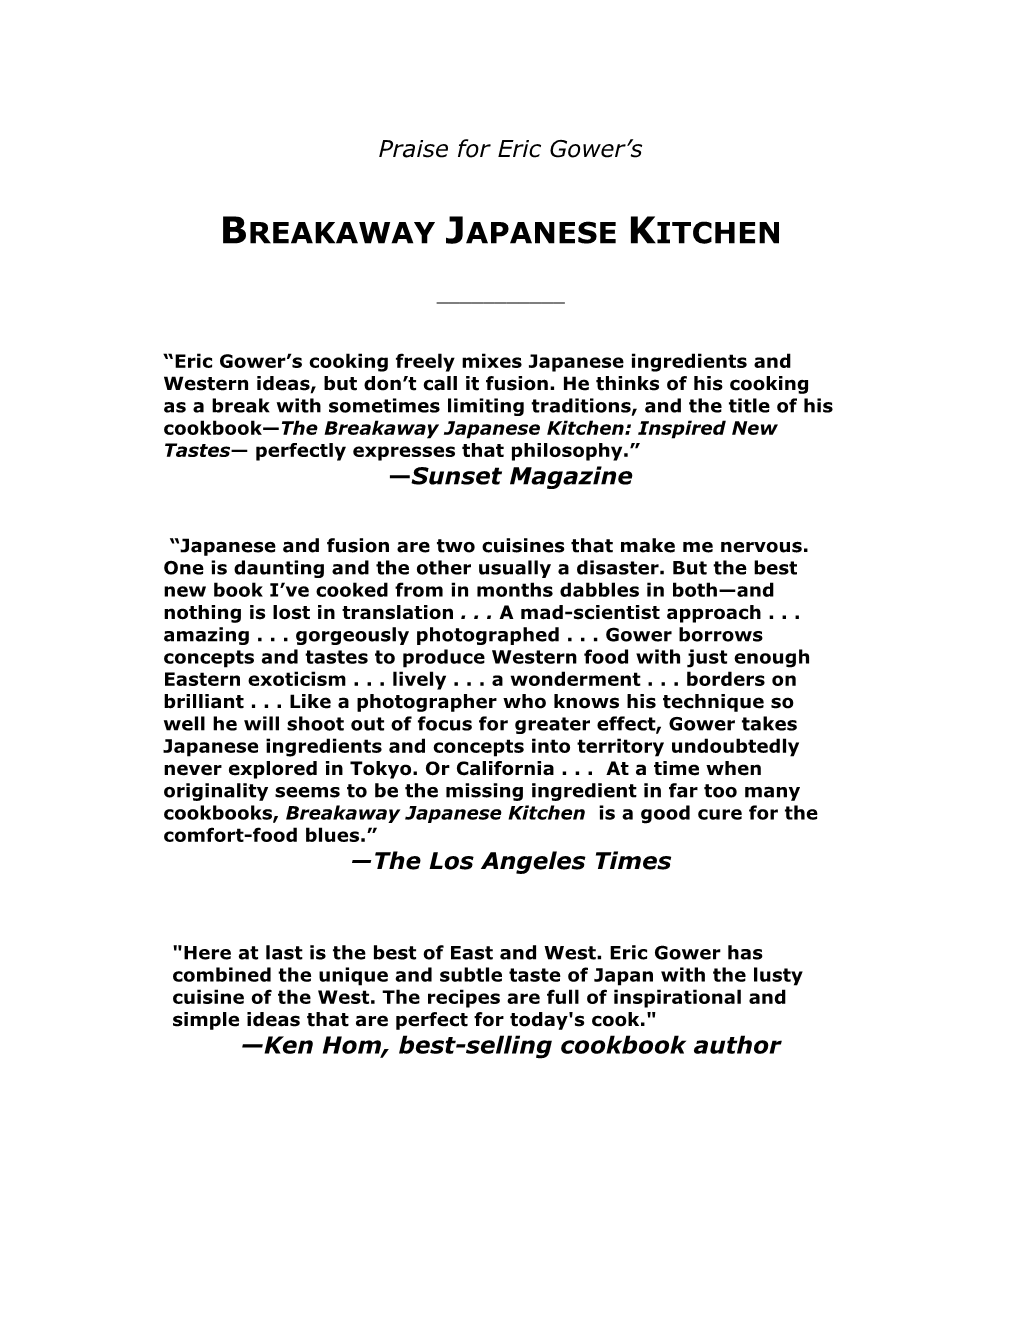 Breakaway Japanese Kitchen